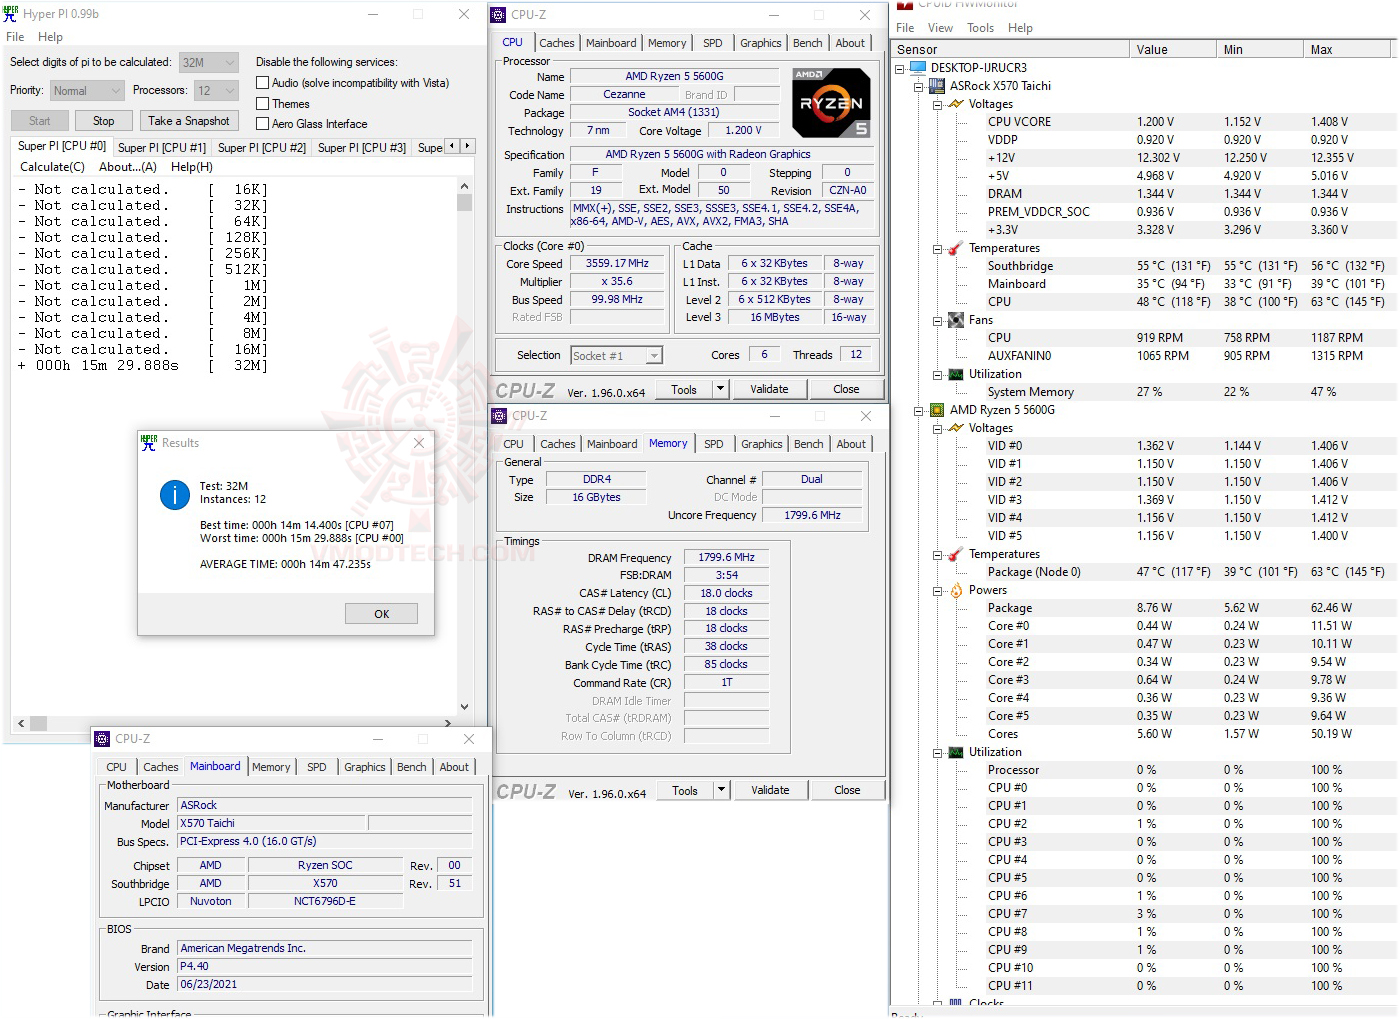 h32 2 AMD RYZEN 5 5600G PROCESSOR REVIEW